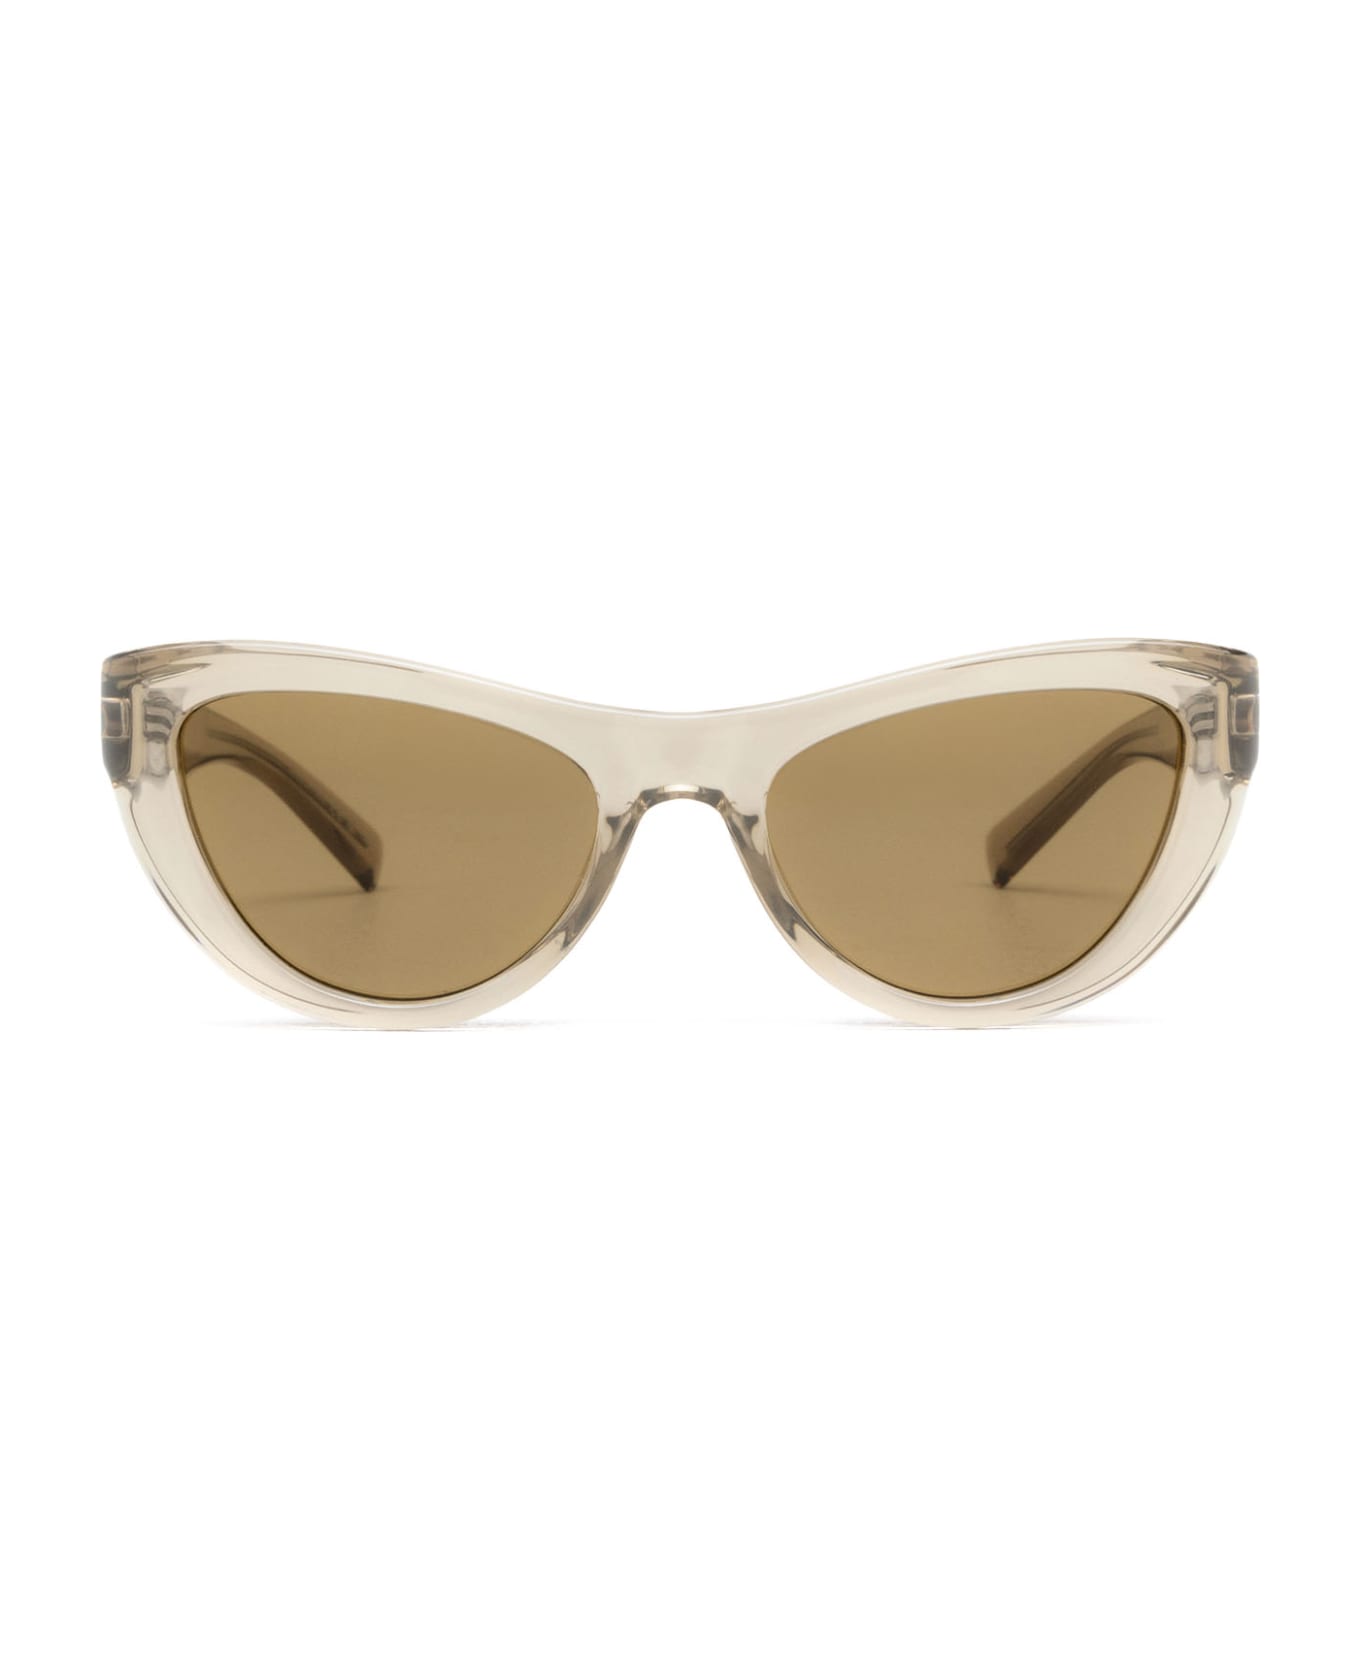 Saint Laurent Eyewear Sl 676 Beige Sunglasses - Beige